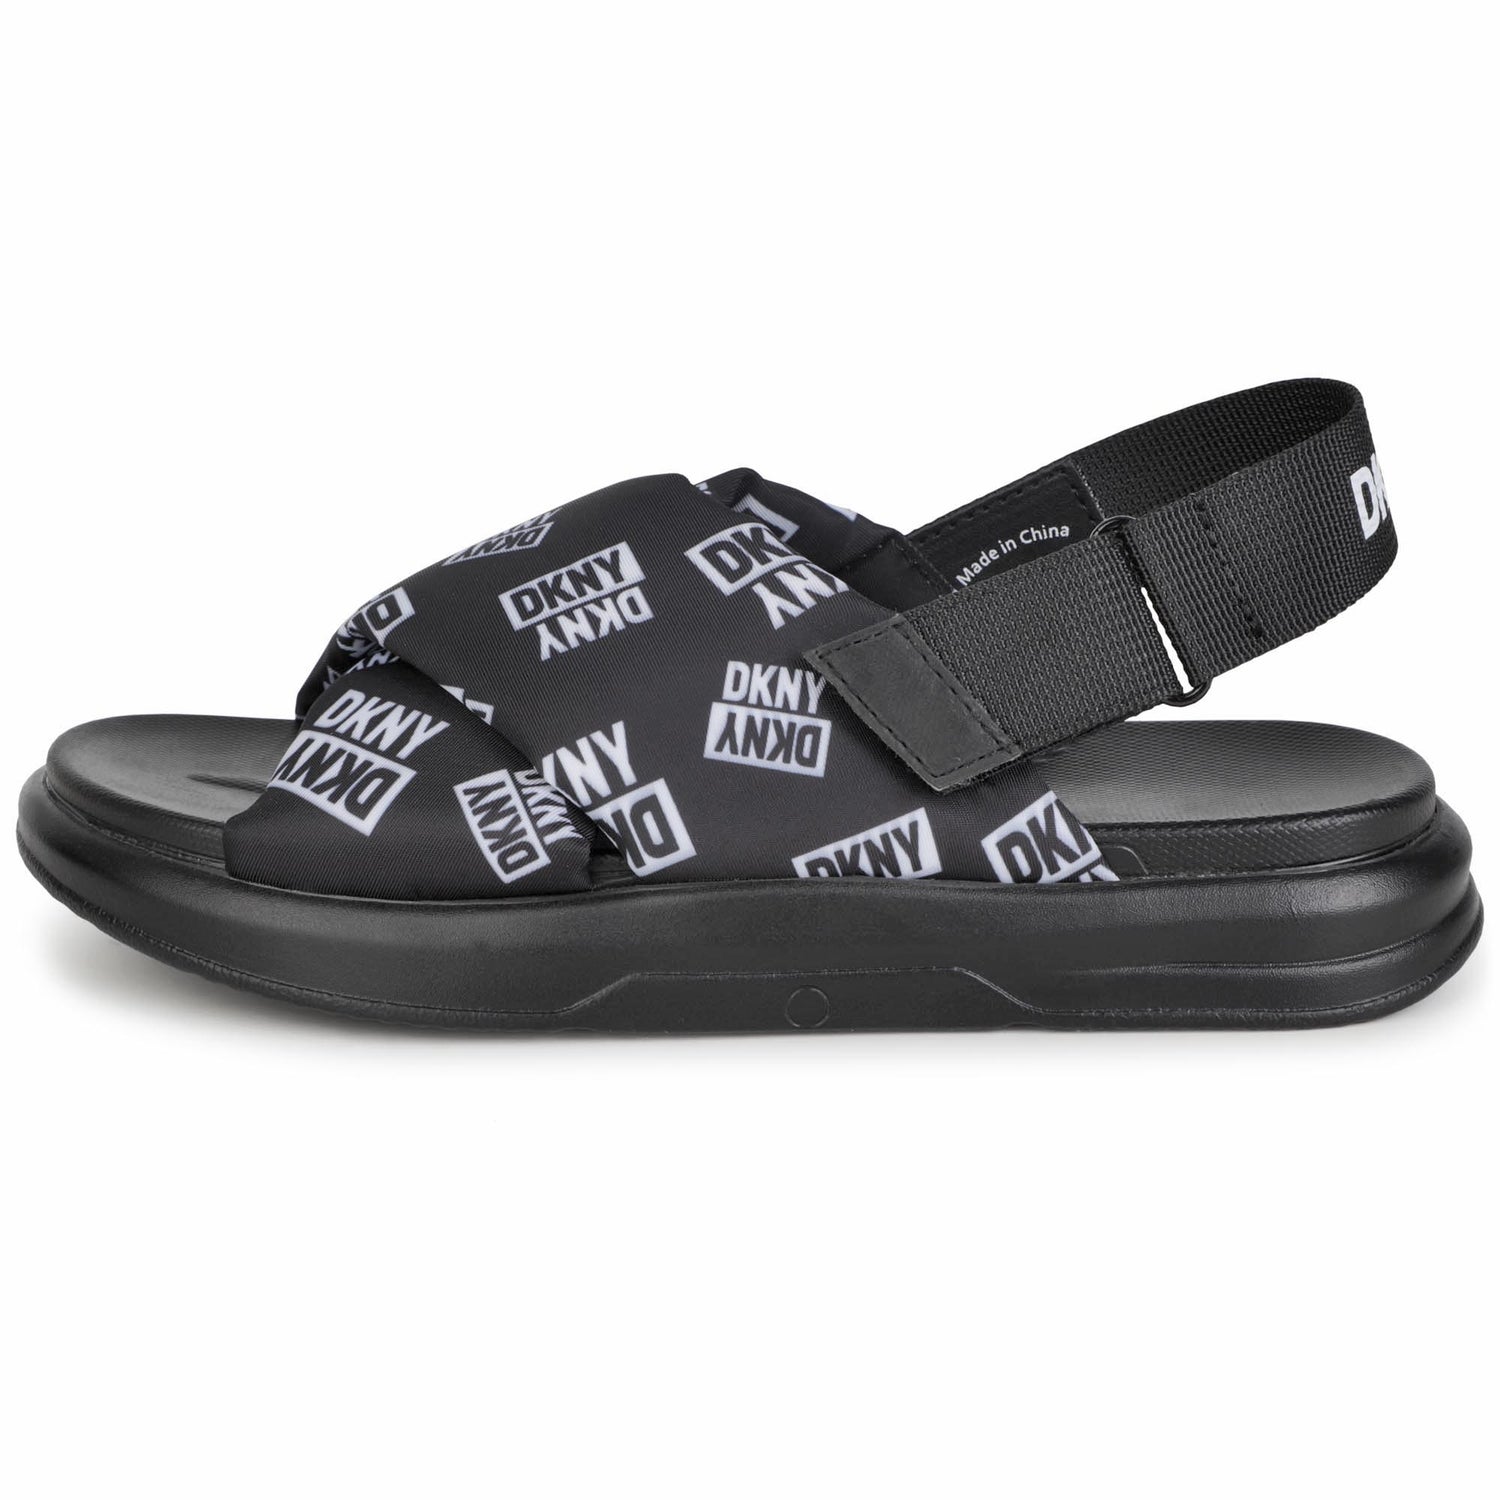 DKNY Sandals Style: D39104